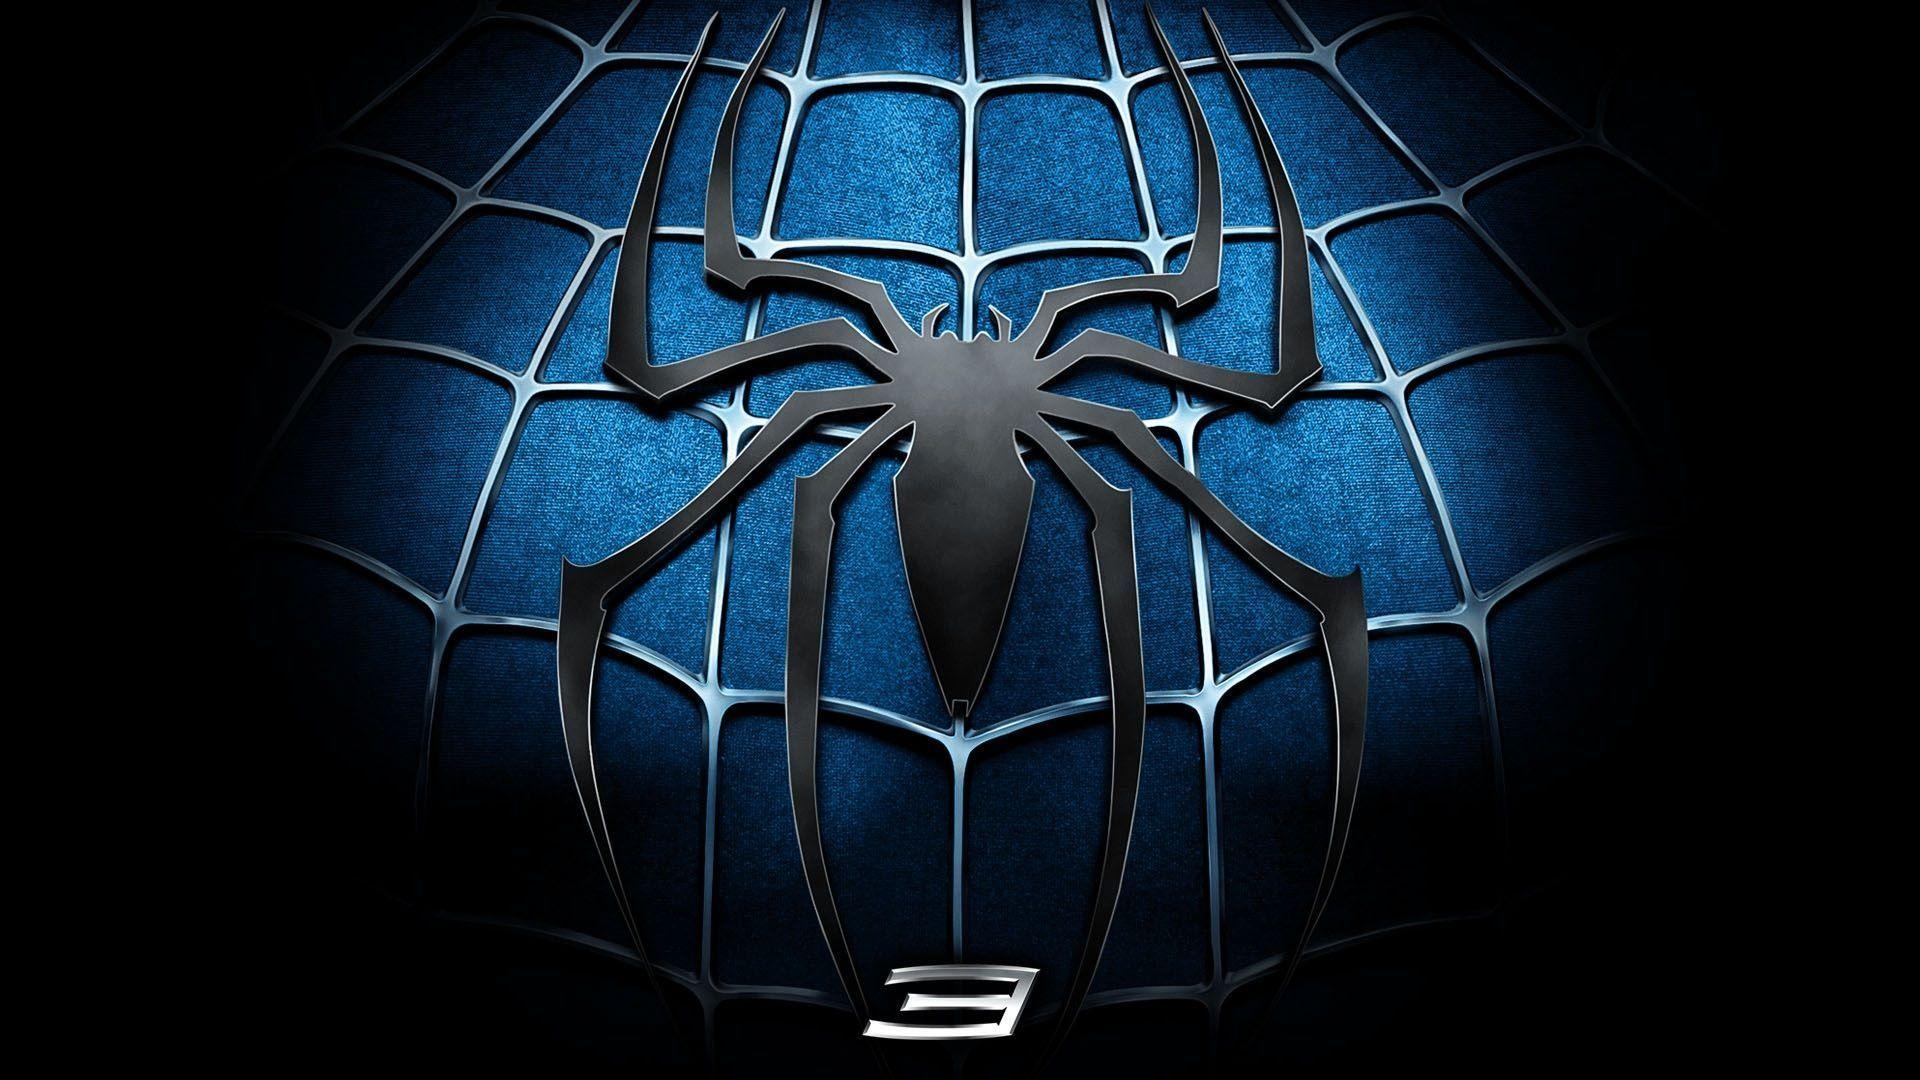 Logo Spiderman Wallpapers Wallpaper Cave